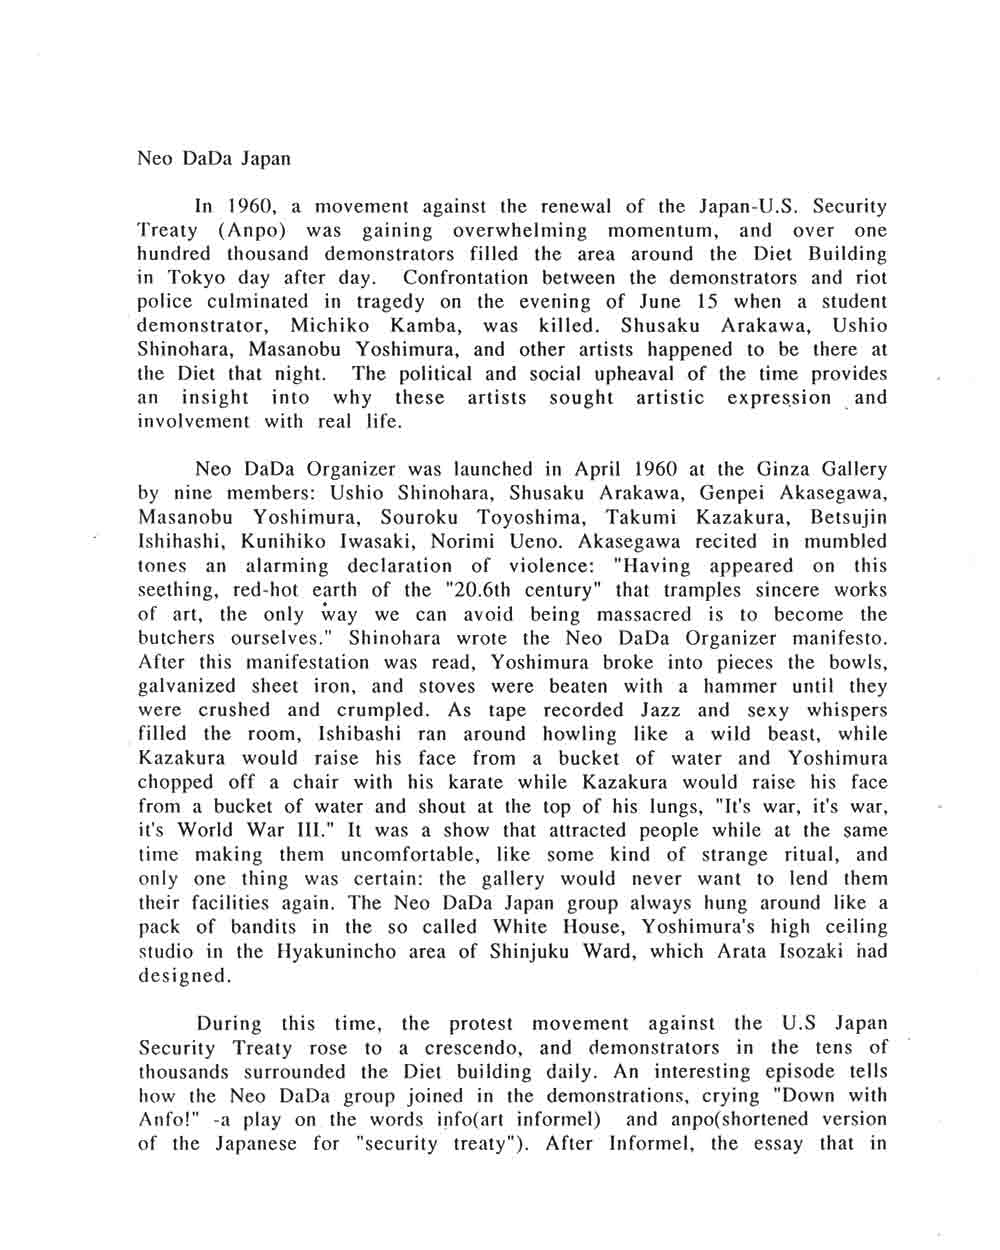 Neo DaDa Japan 1958-1998, essay, pg 1